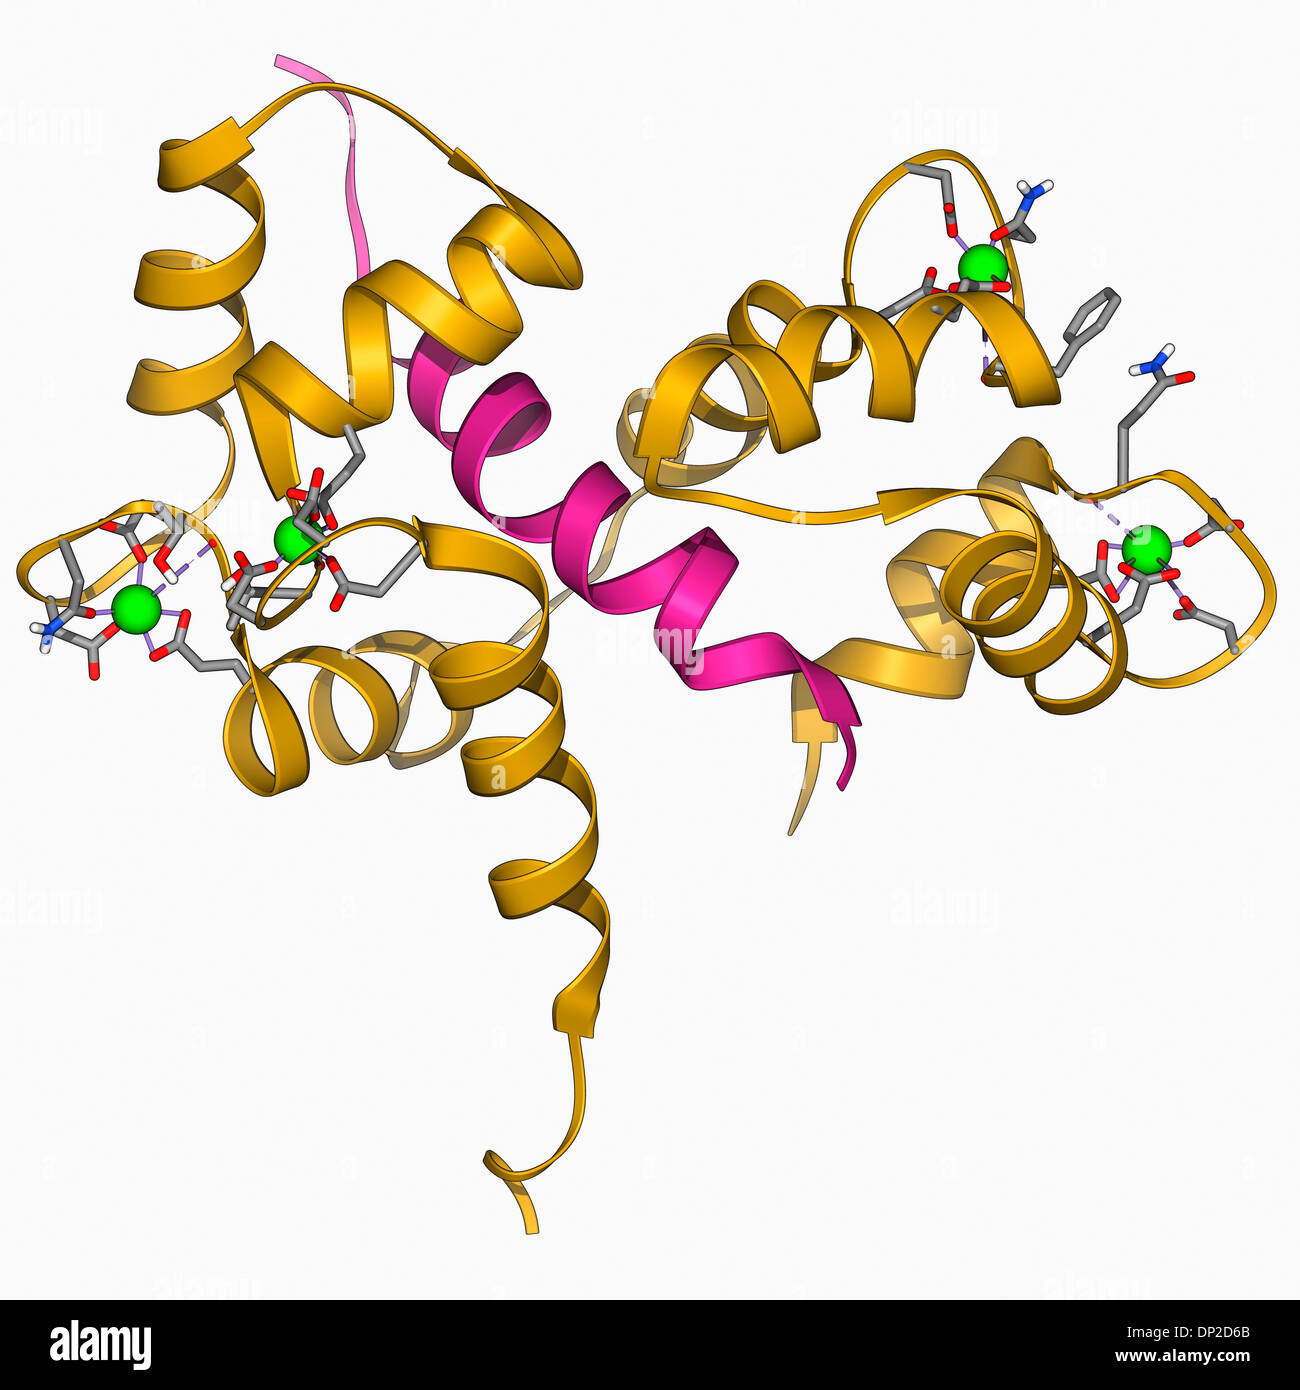 Calcium-binding protein molecule Stock Photo